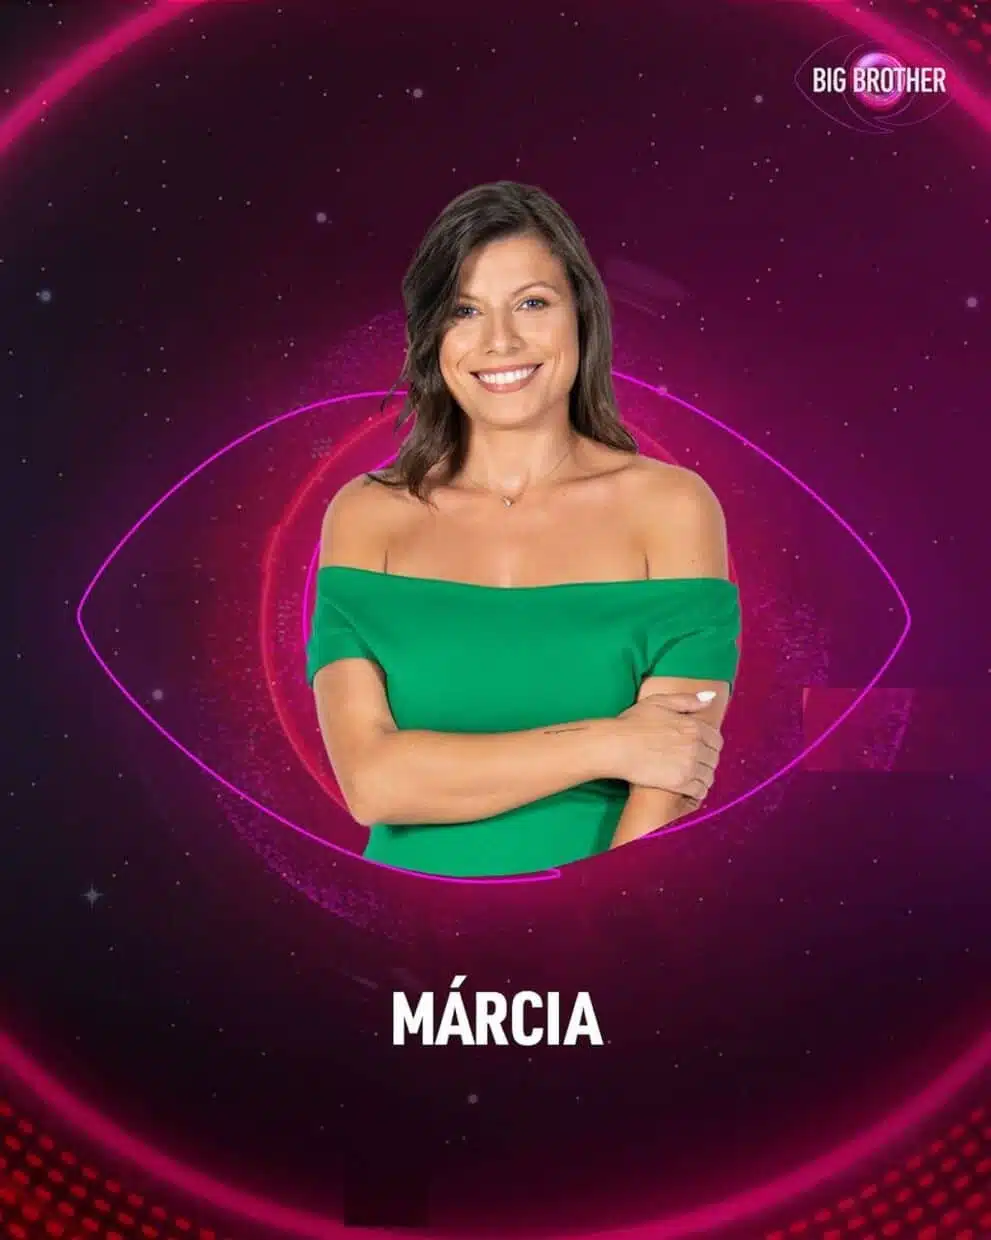 Marcia-Big-Brother